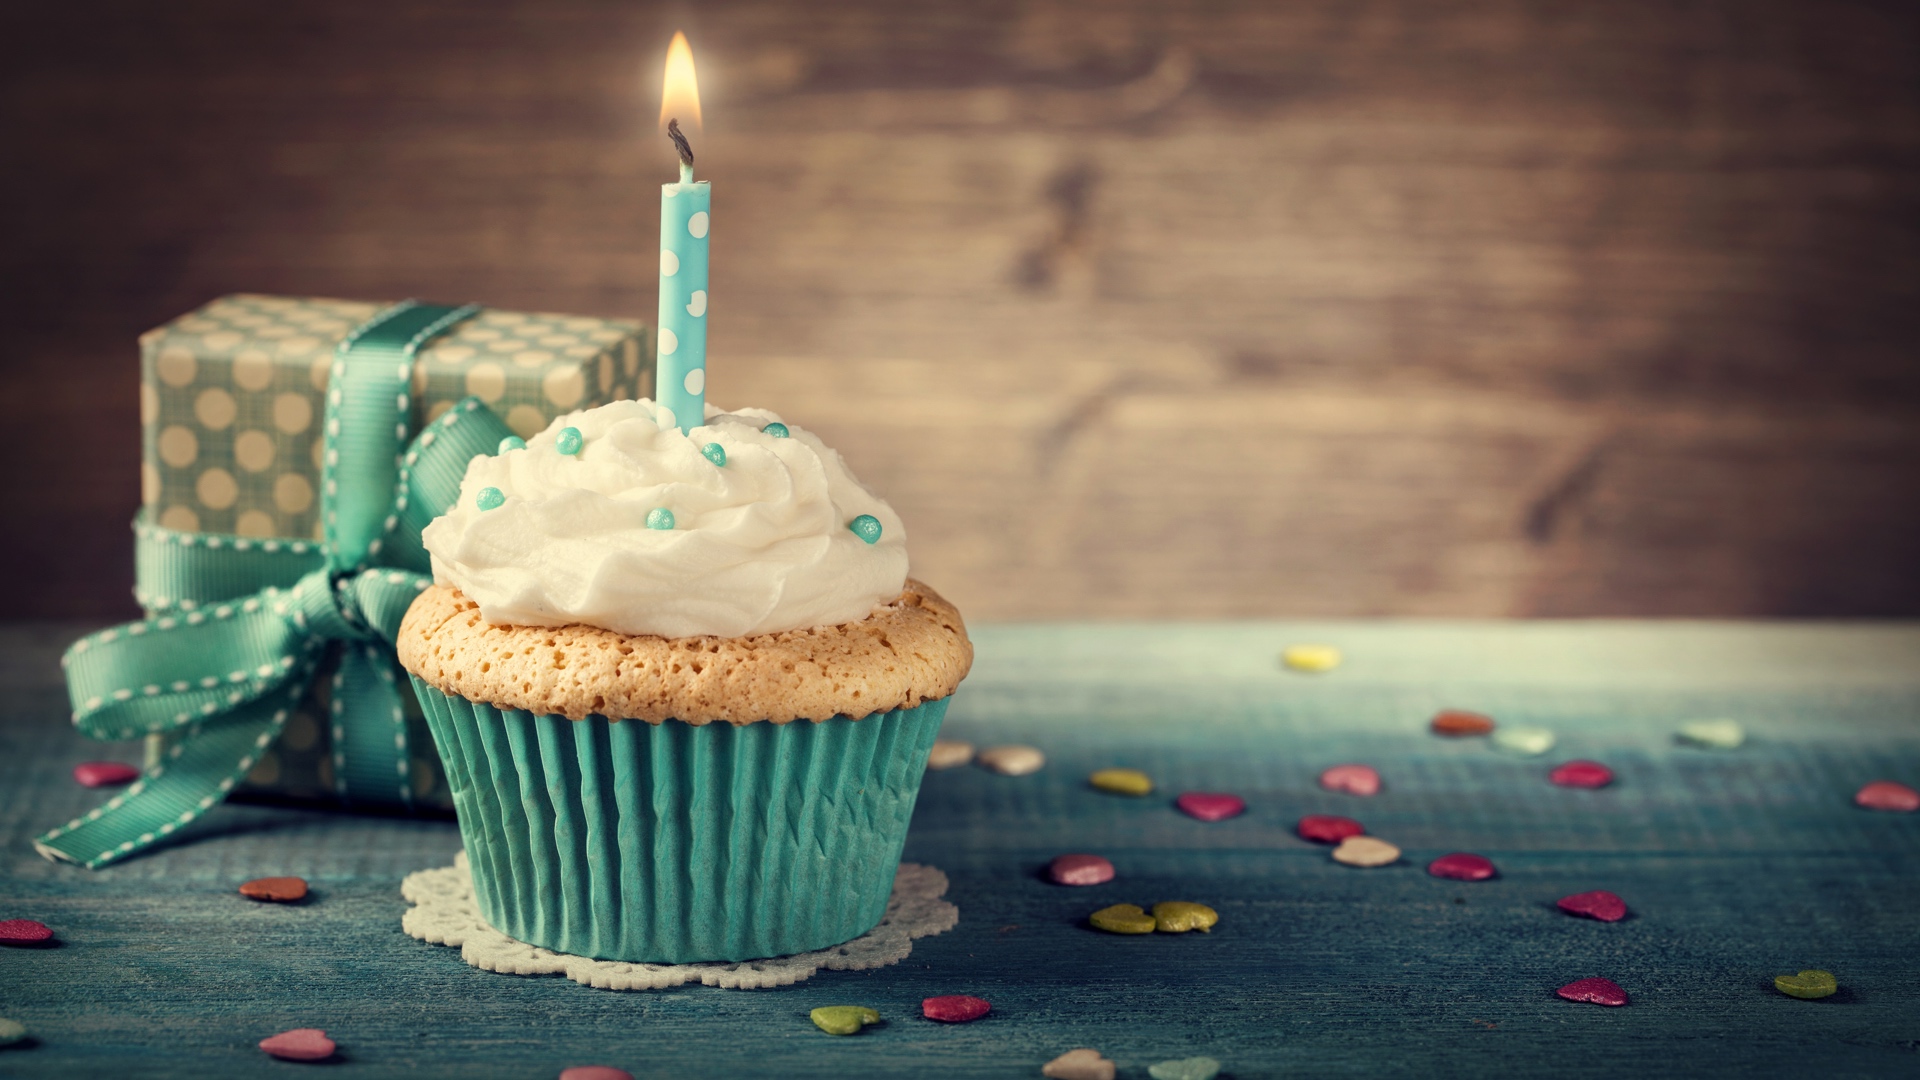 The blog celebrates its first birthday